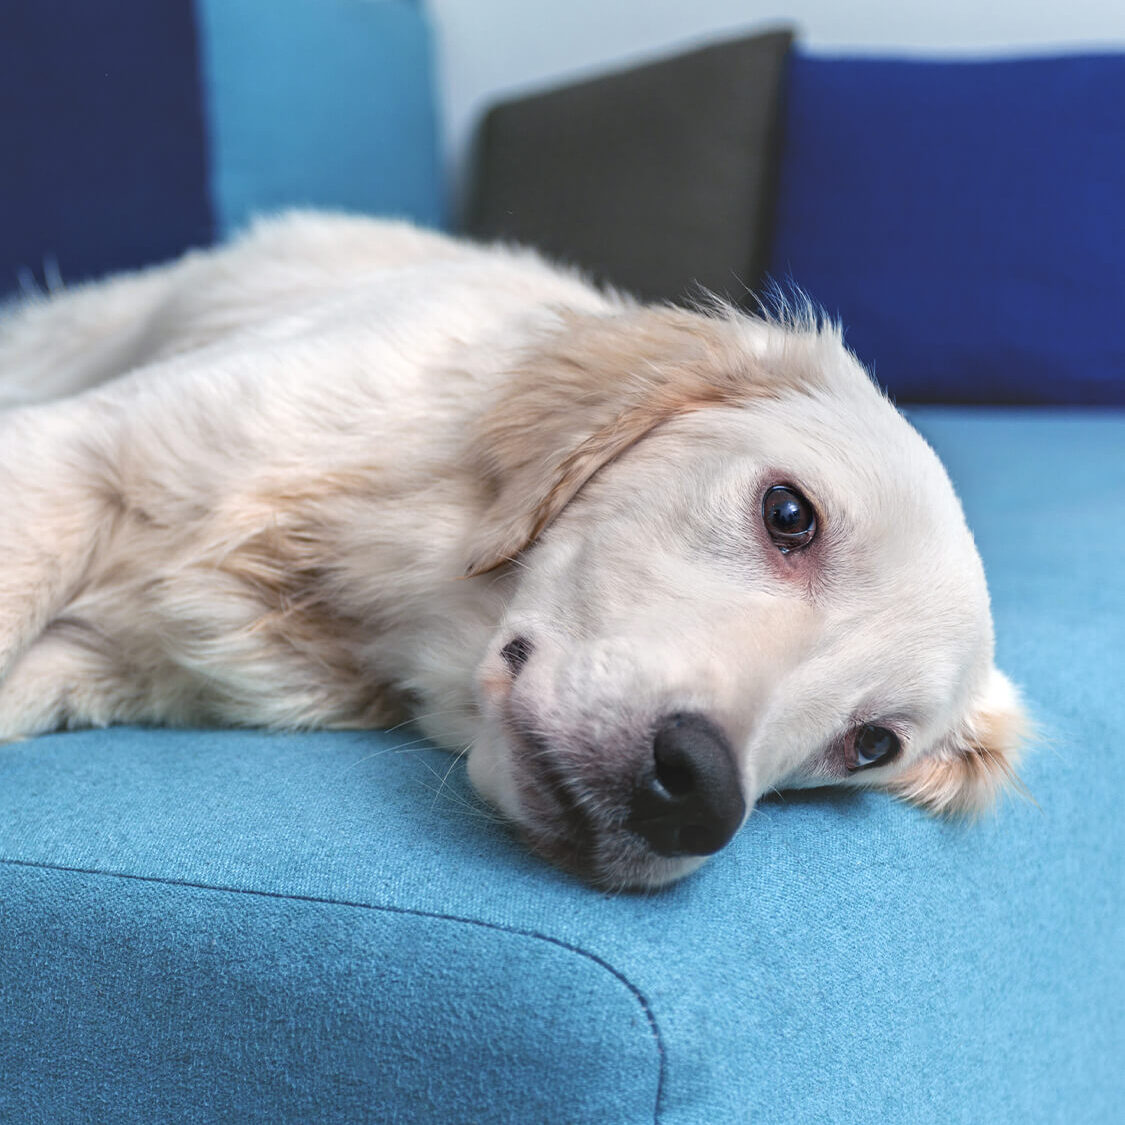 Sad Dog On Couch